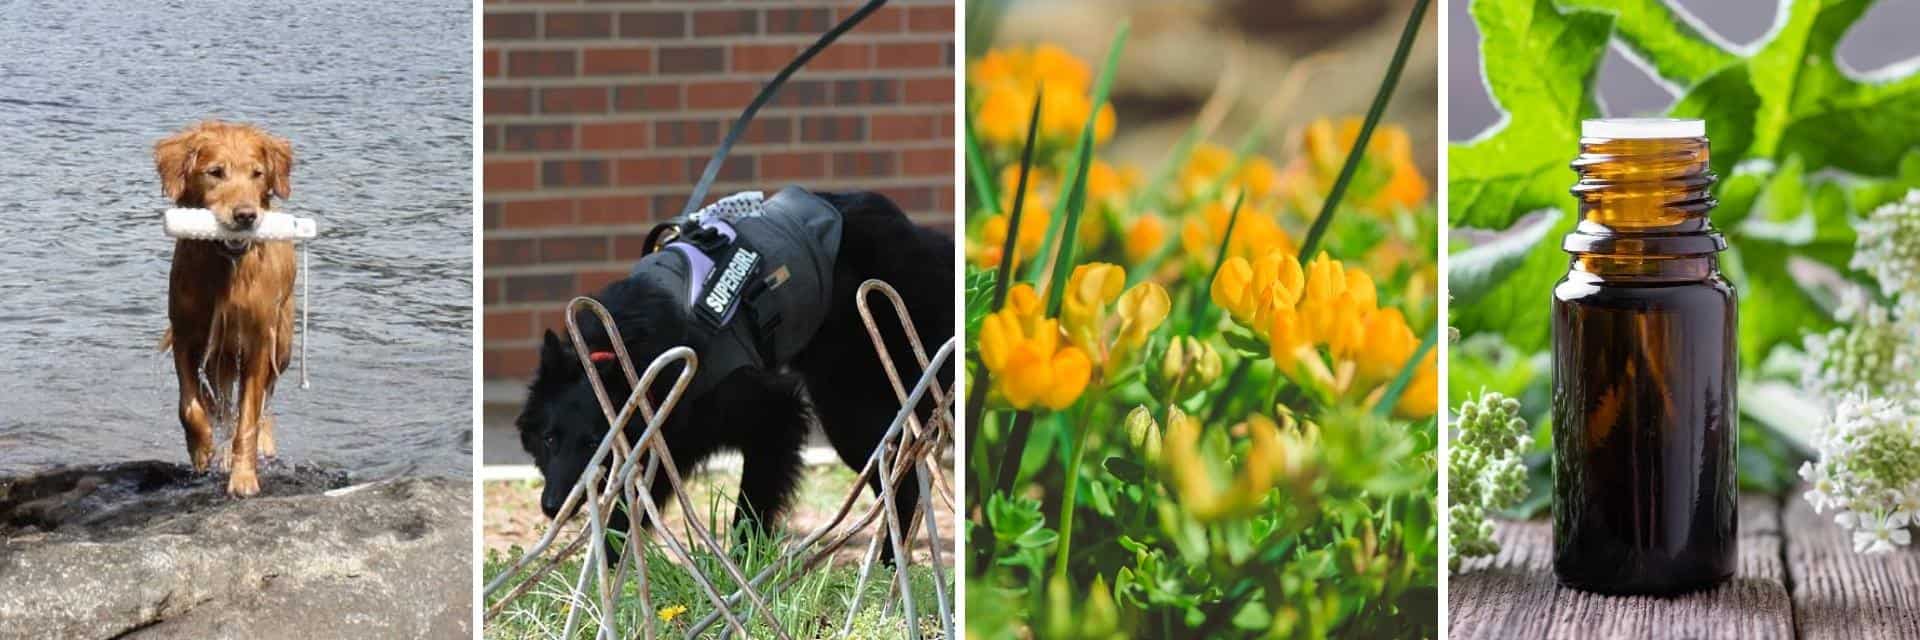 Aldaron flower essence blends for dogs - success stories